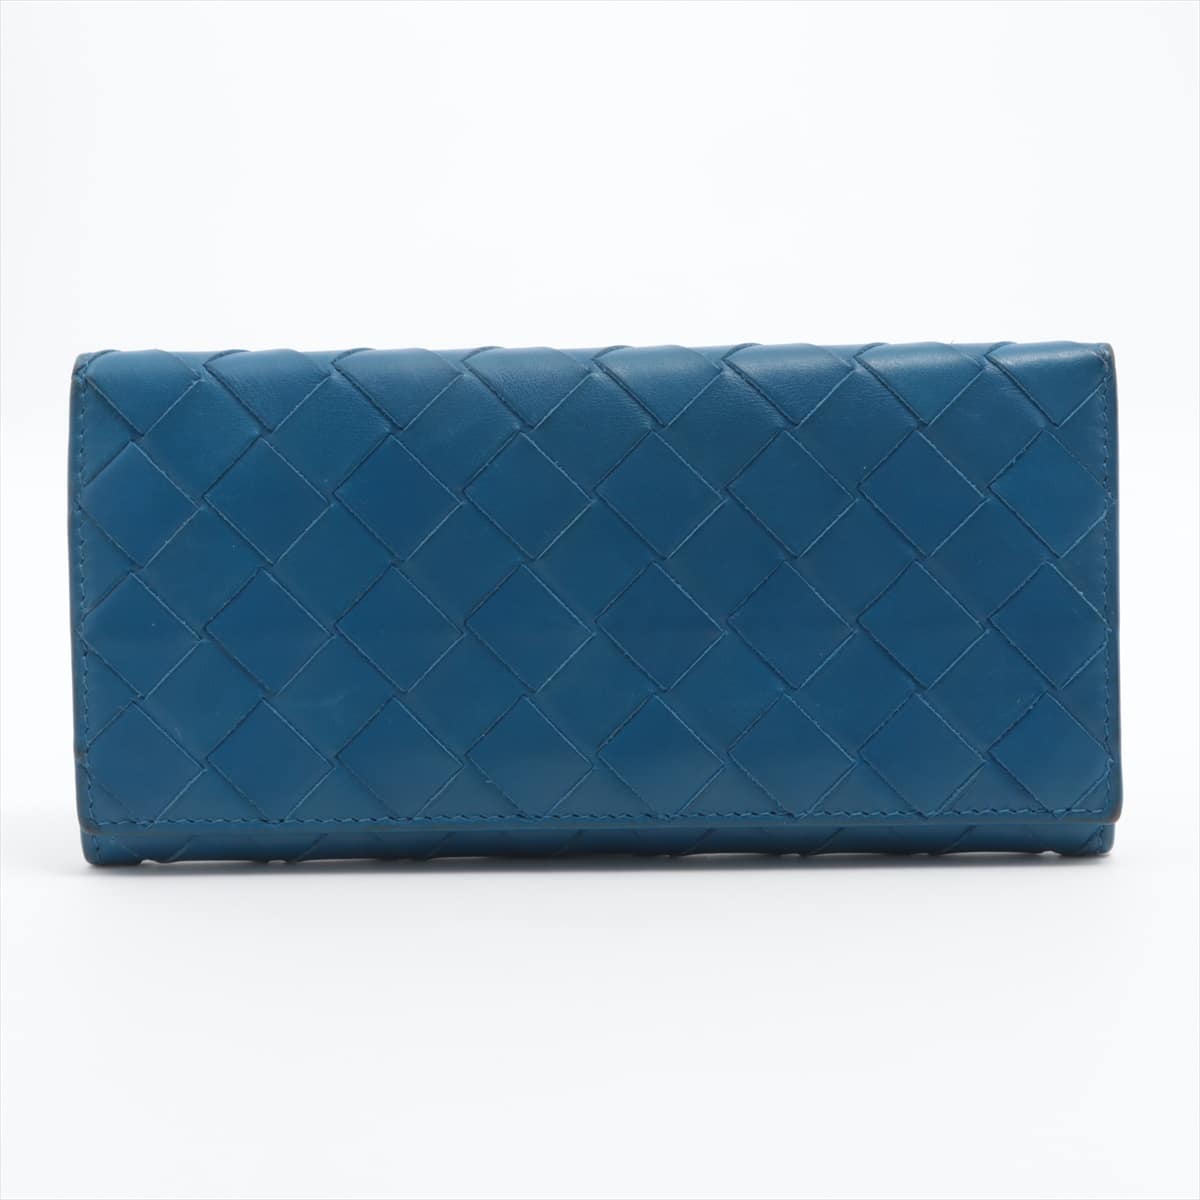 Bottega Veneta Intrecciato Leather Wallet Blue